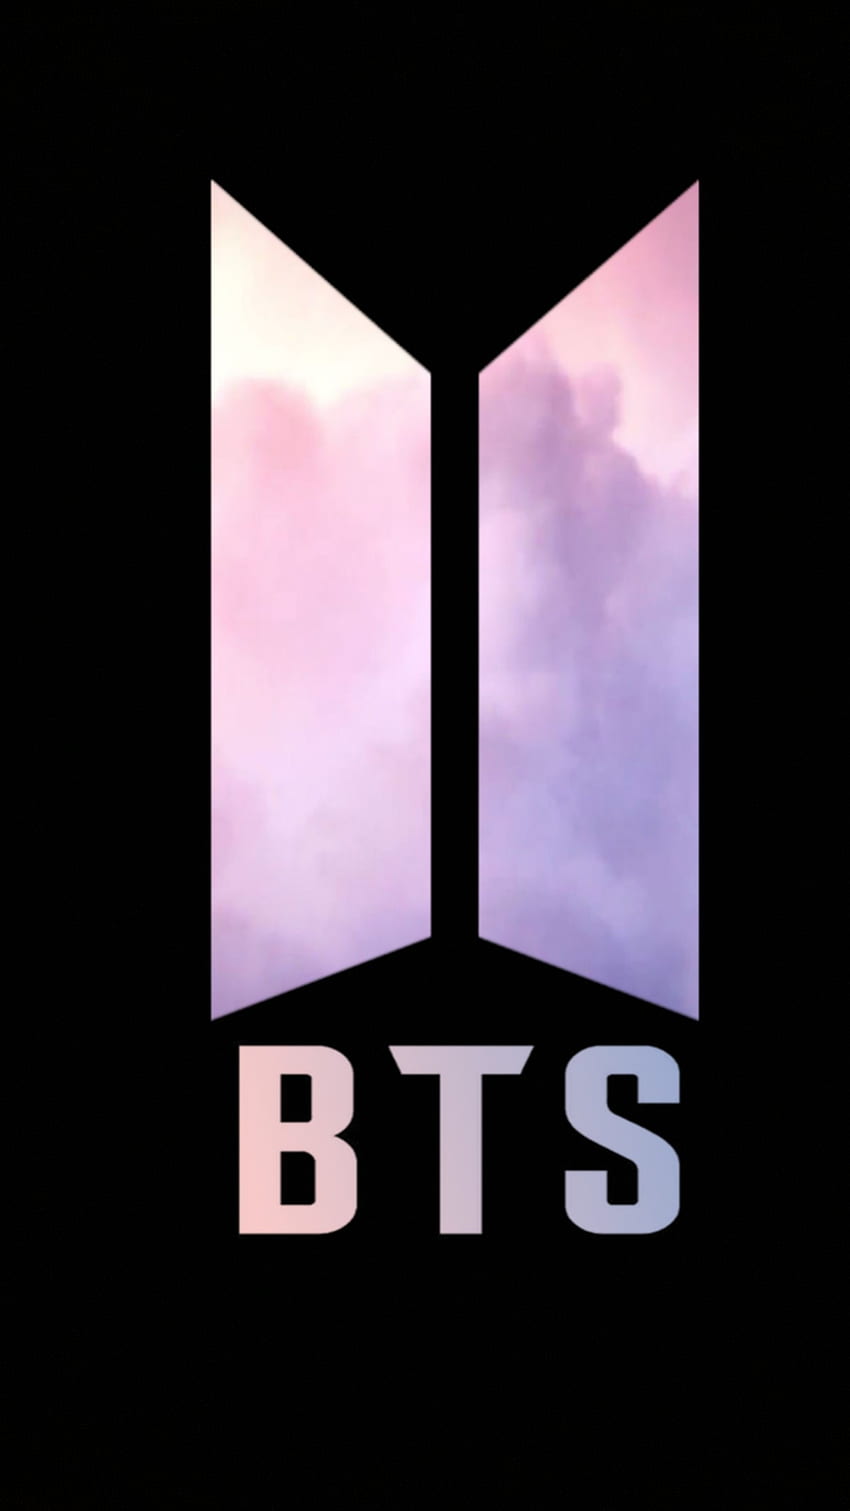 Bts のシンボル、紫のロゴ HD電話の壁紙